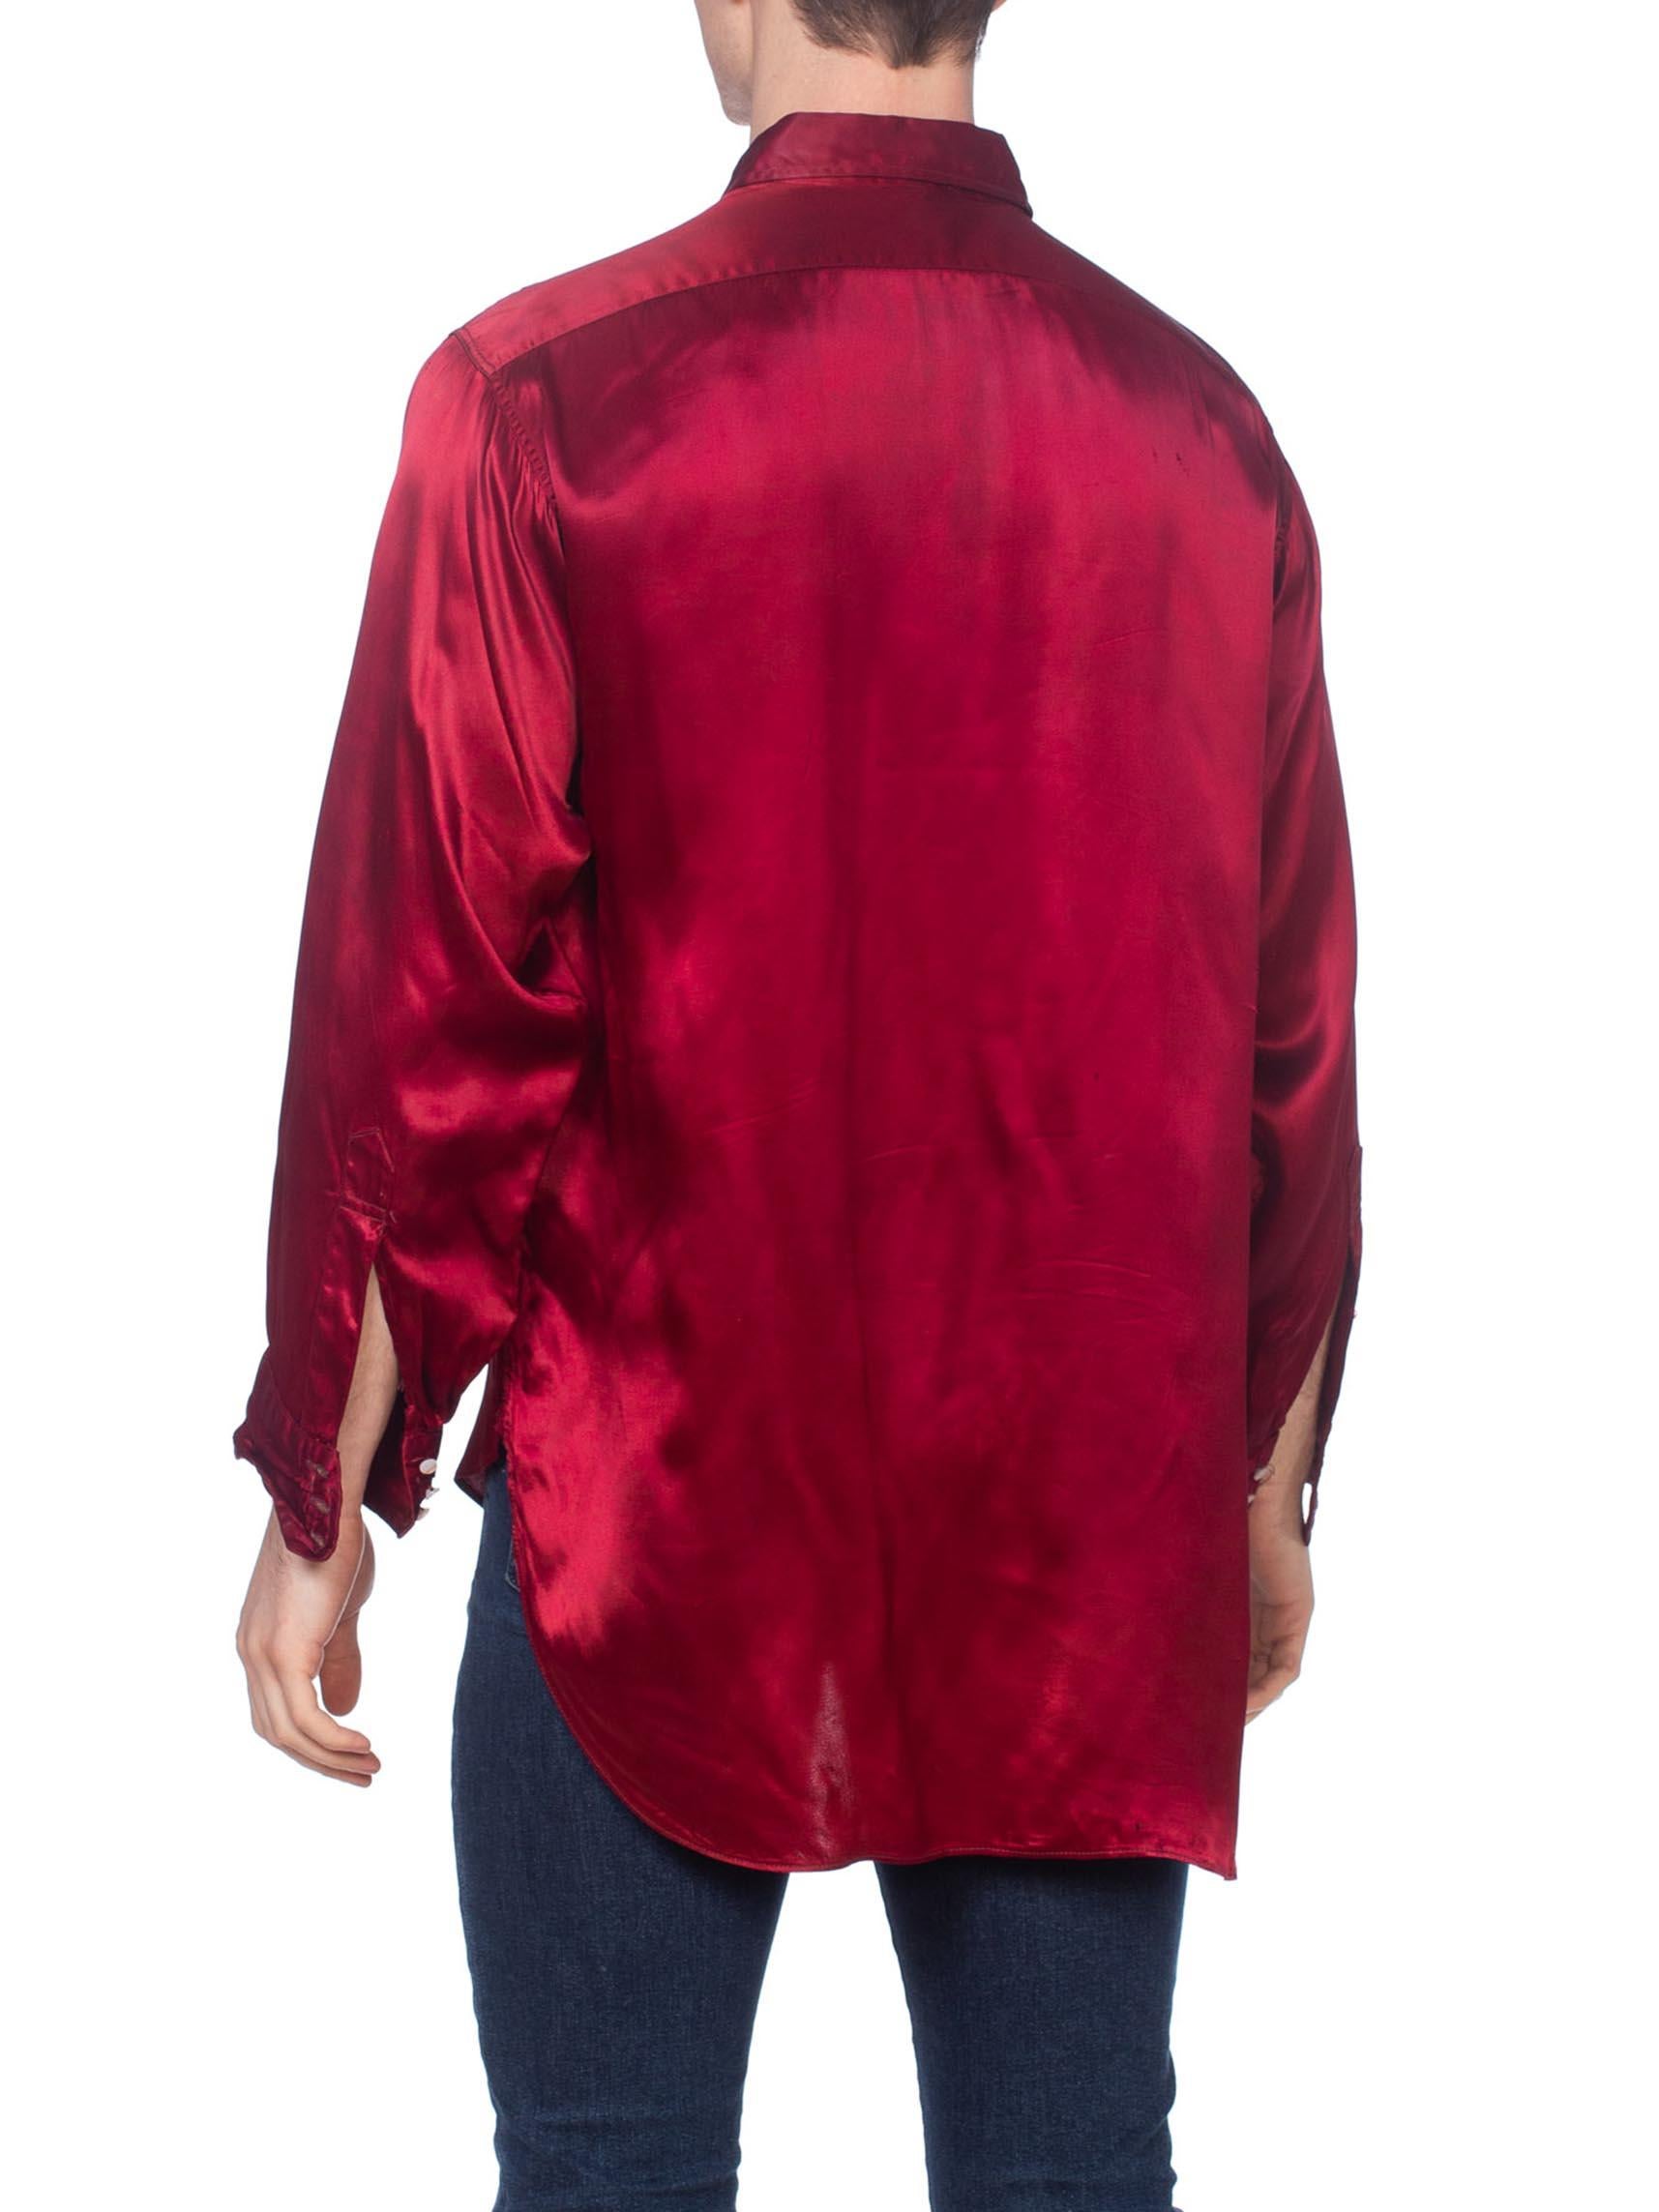 red rayon shirt